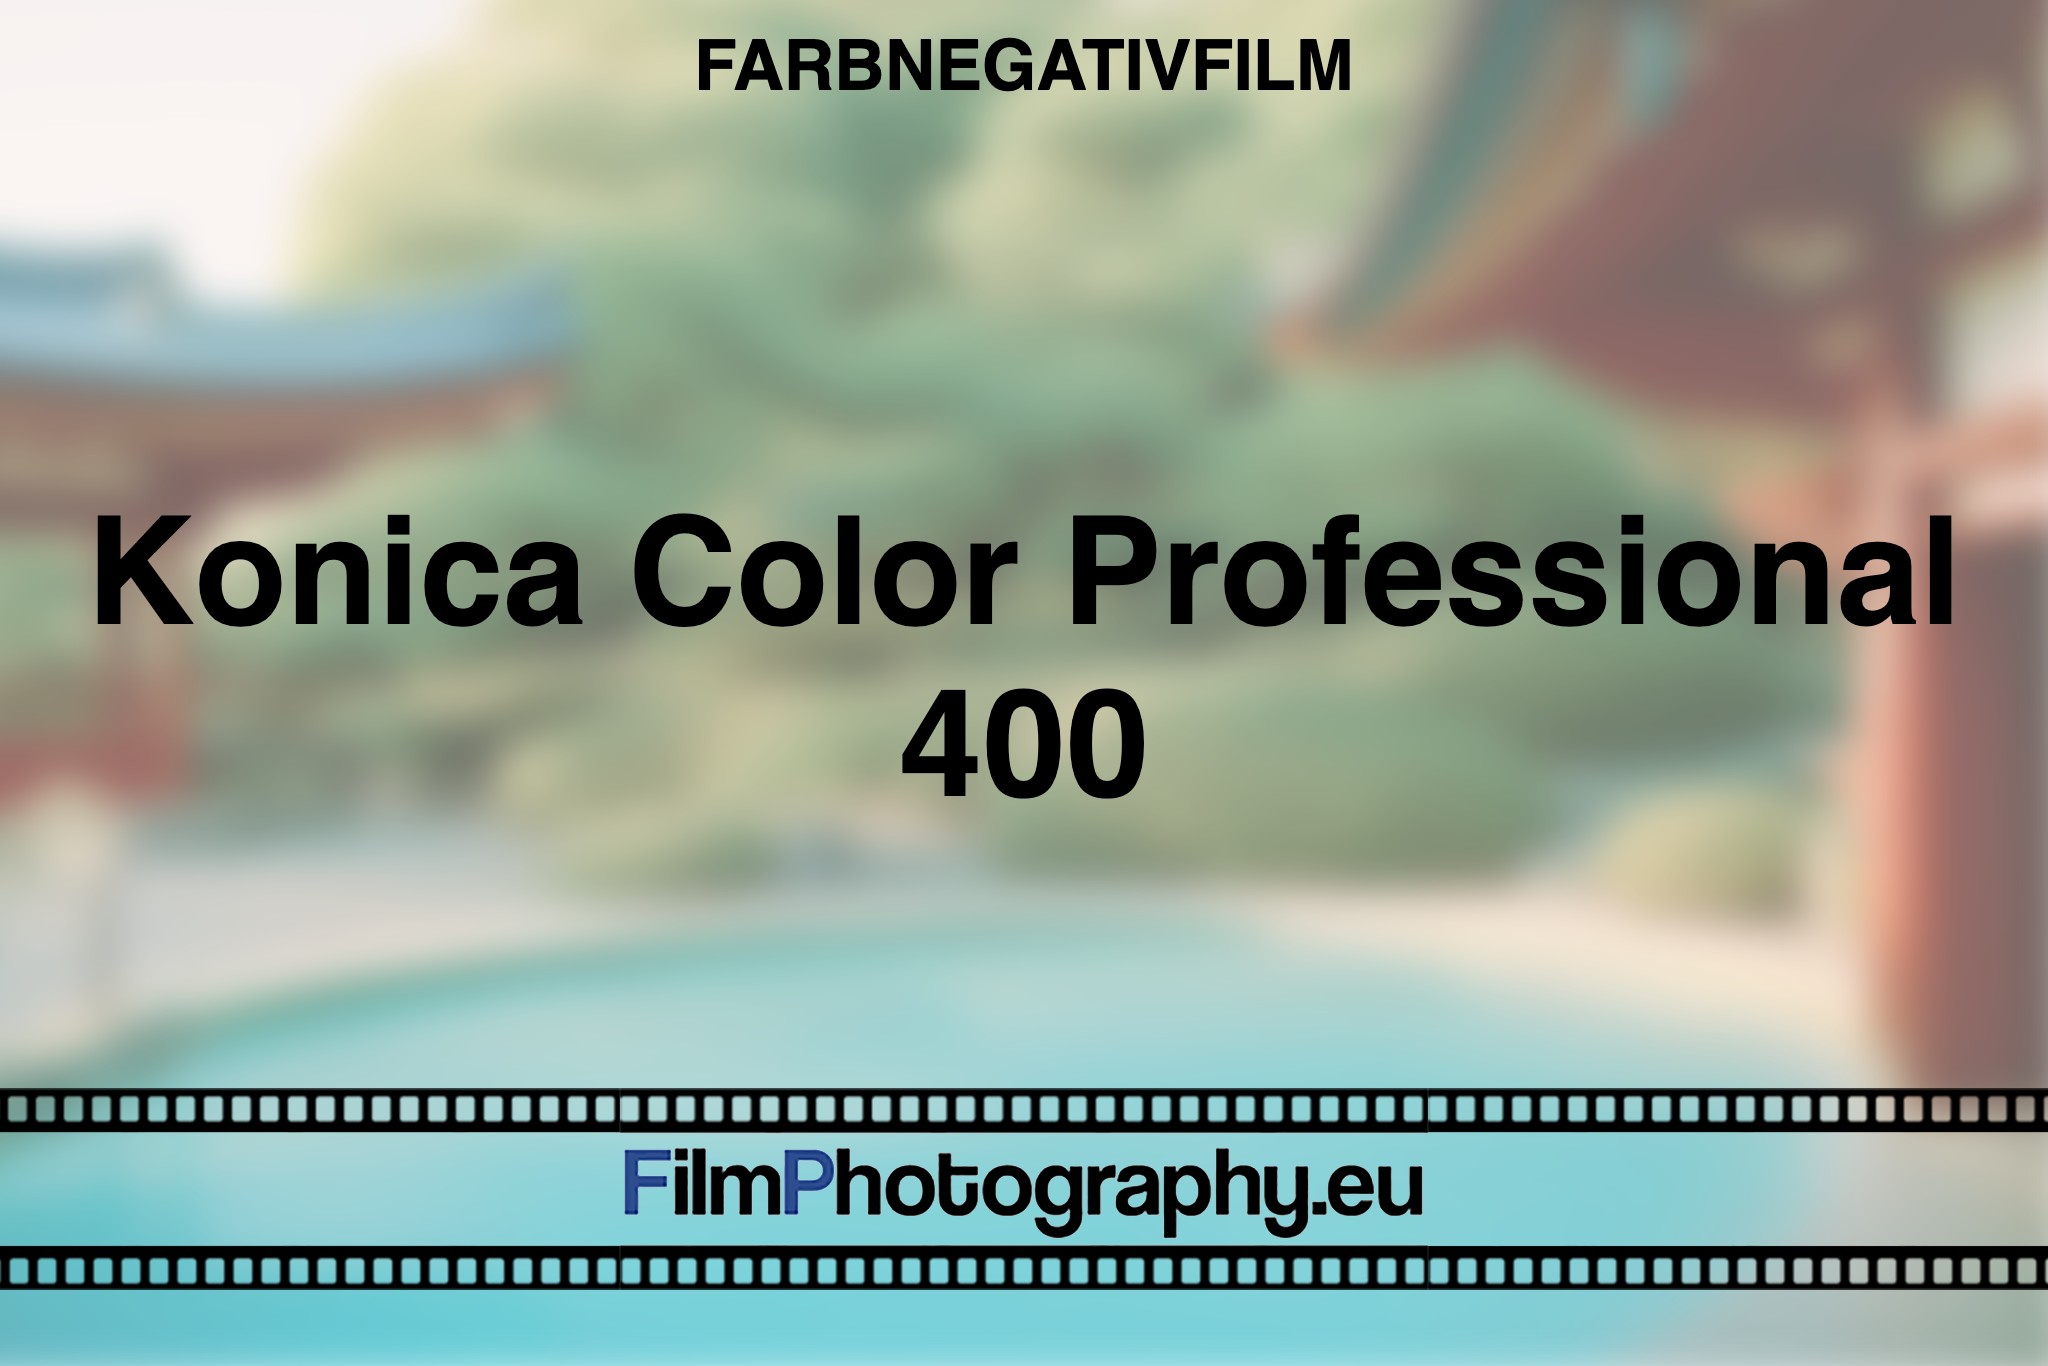 konica-color-professional-400-farbnegativfilm-bnv